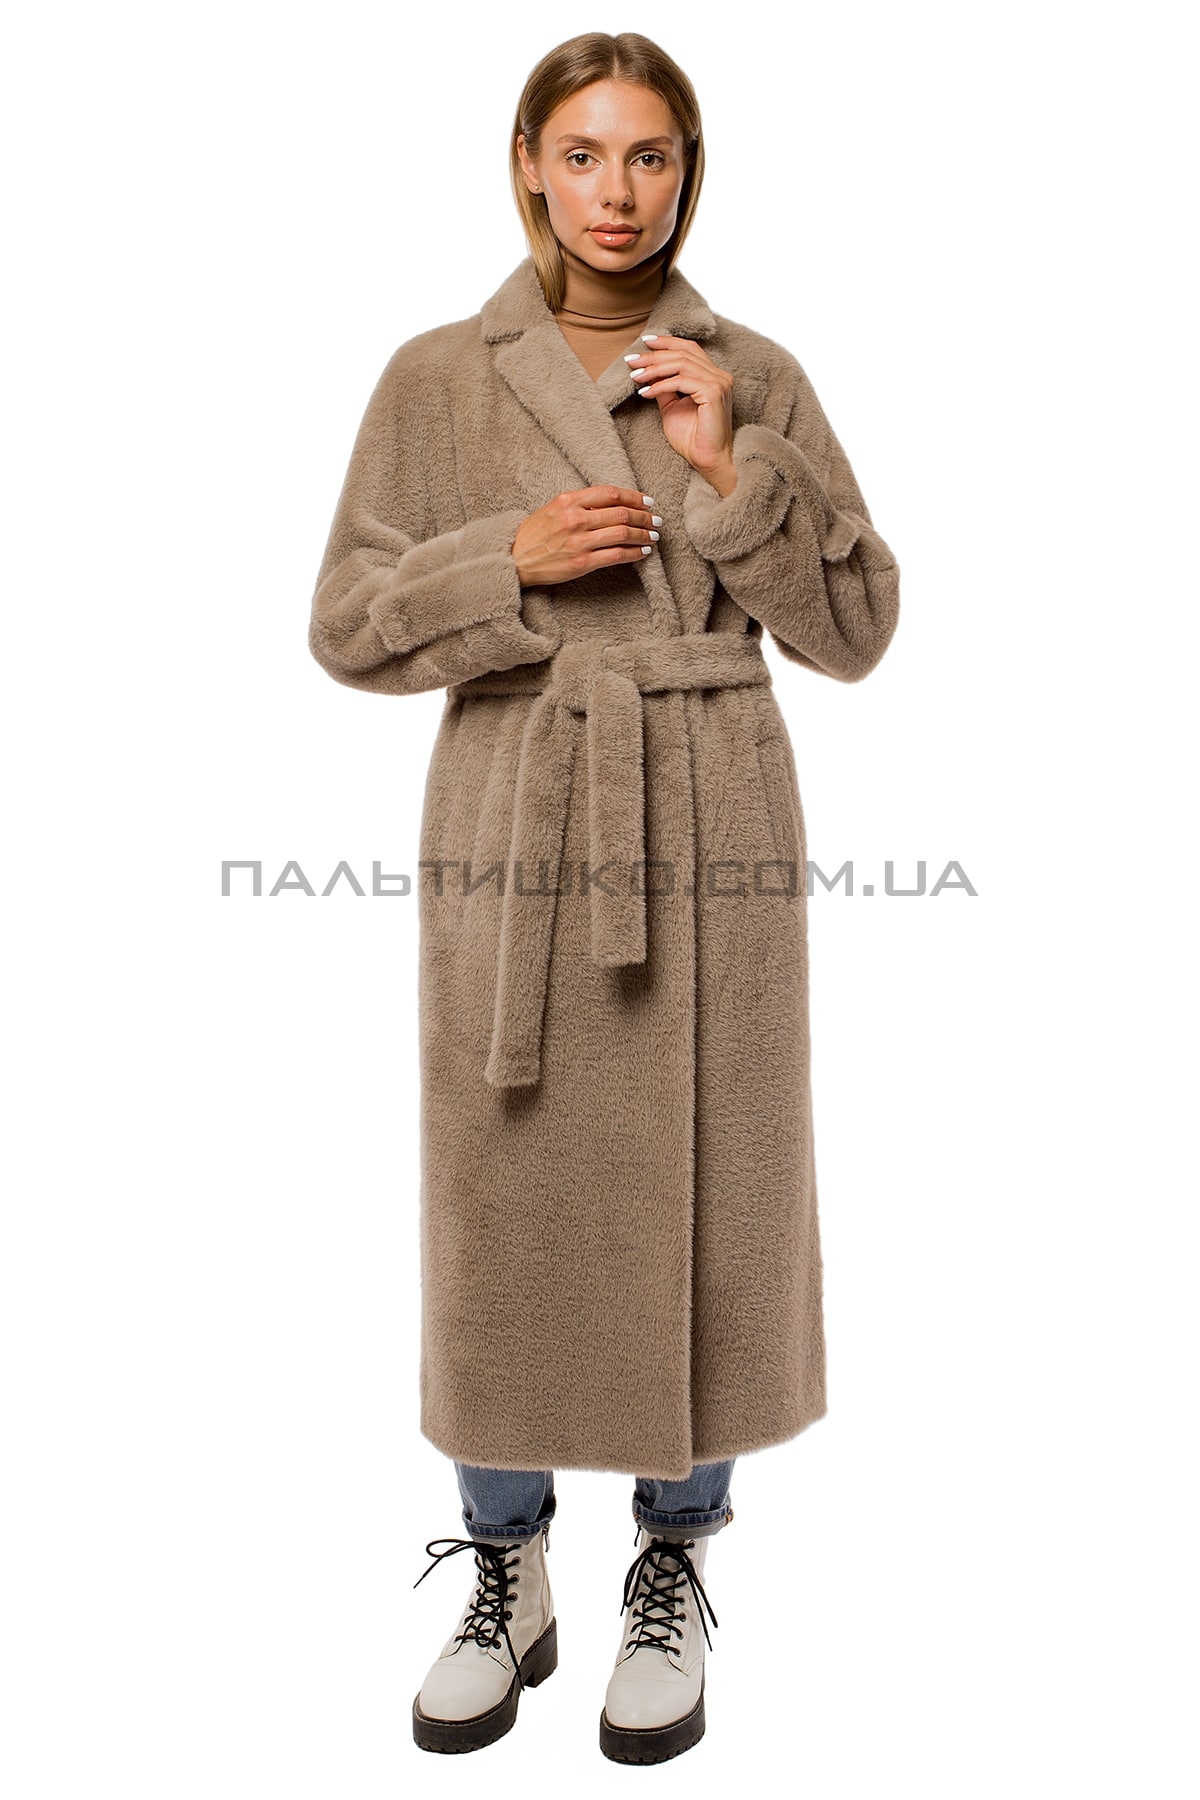  Жіноче пальто-шуба мокко